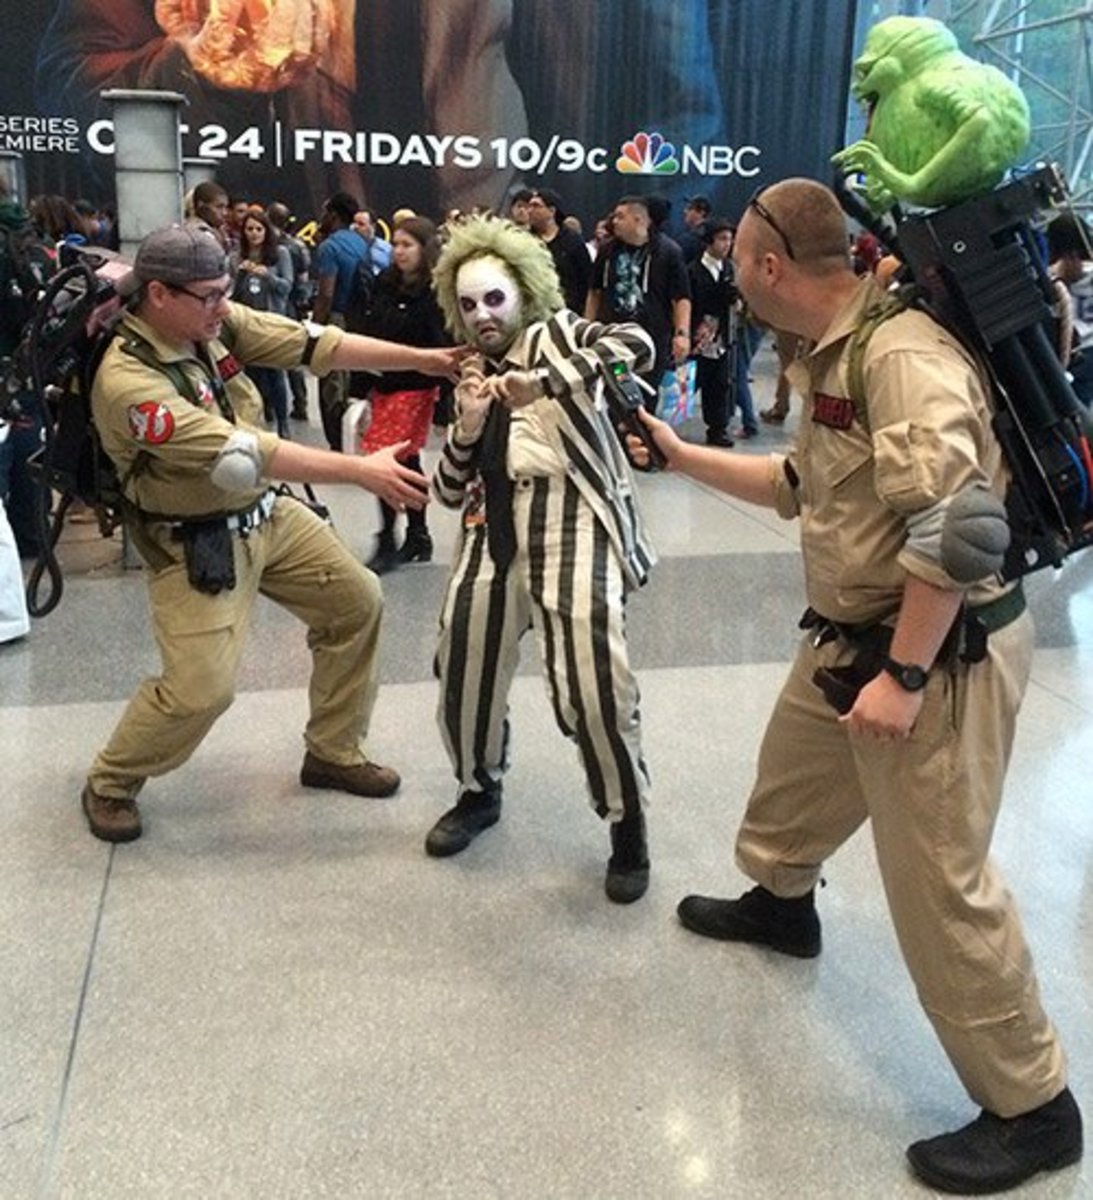 Cosplays of the Ghostbusters lovící Beetlejuice na New York Comic Con 2014.